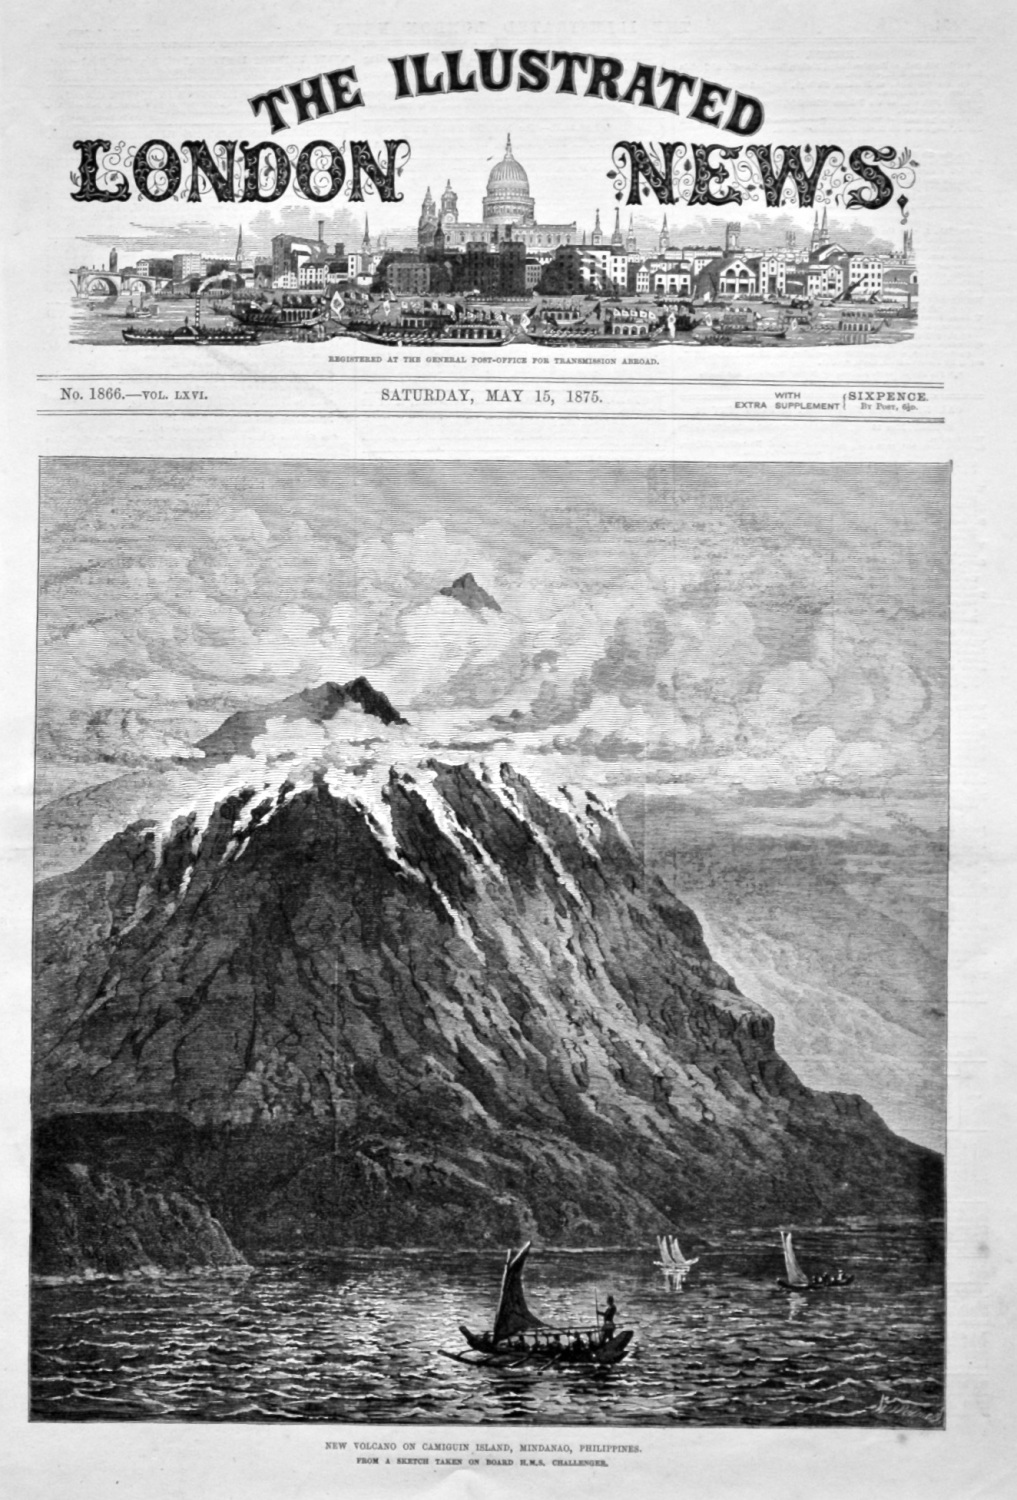 New Volcano on Camiguin Island, Mindanao, Philippines. 1875.